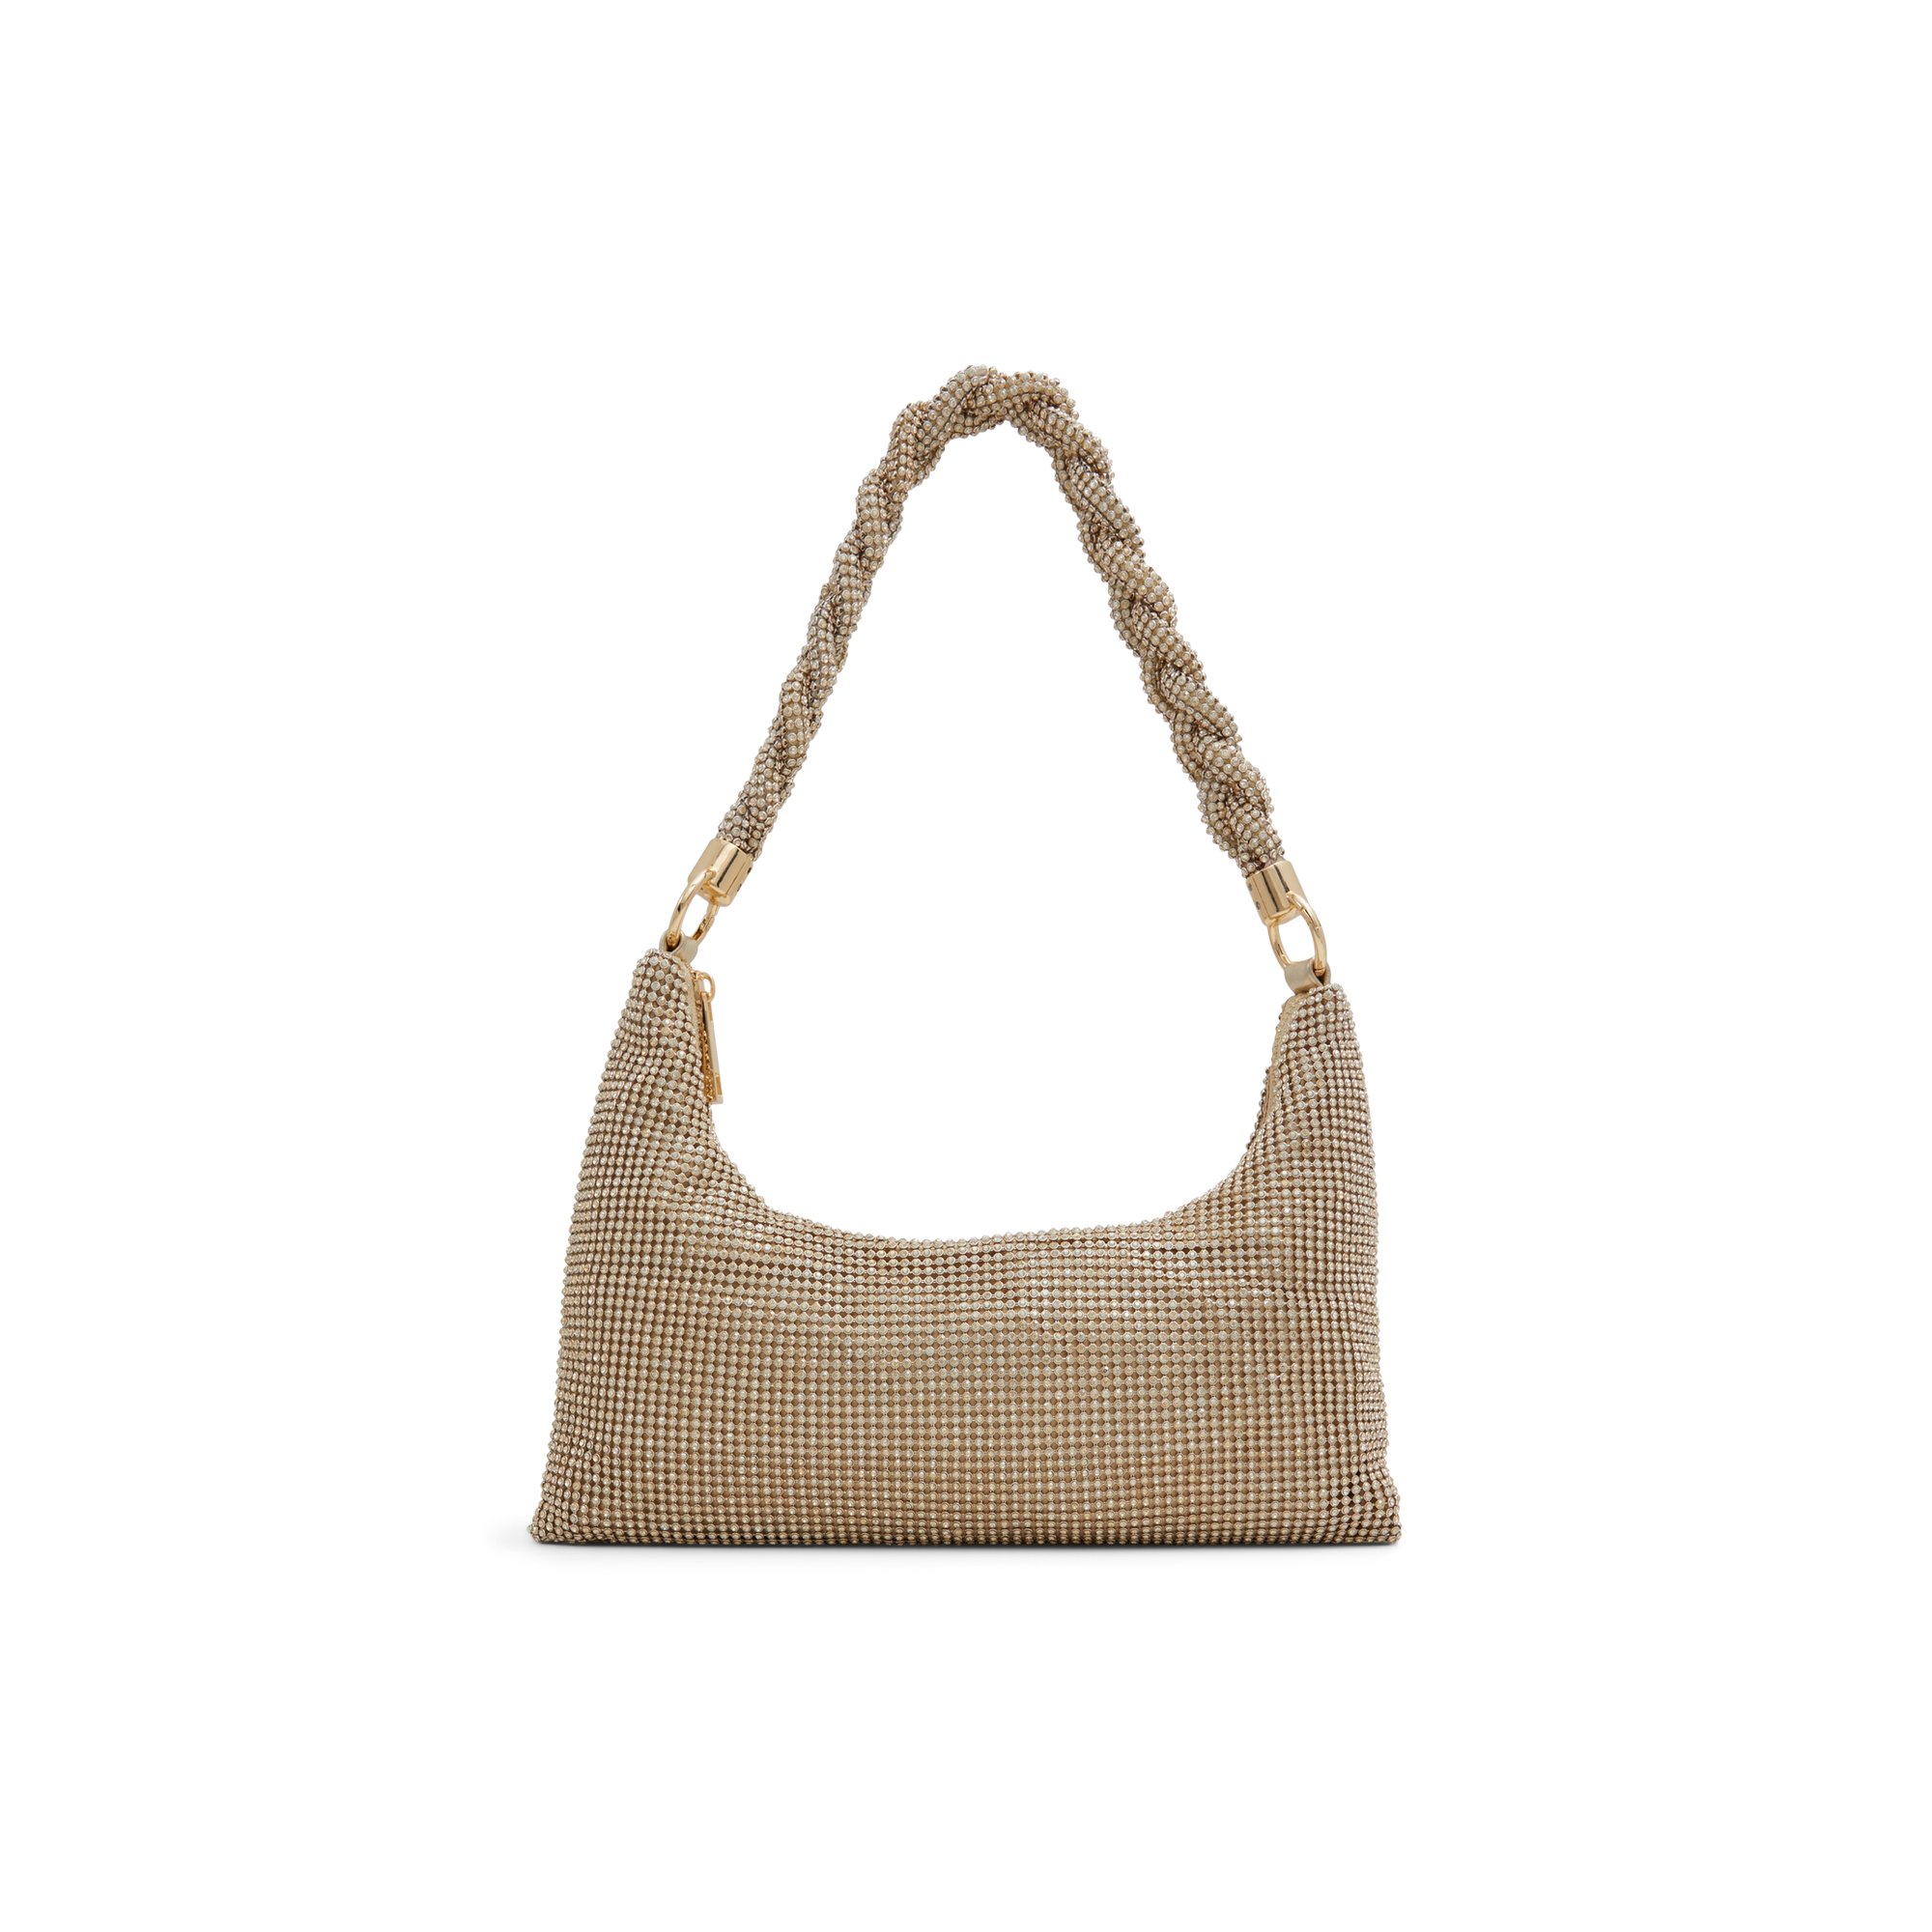 ALDO Marlysax - Women's Handbags Shoulder Bags - Gold